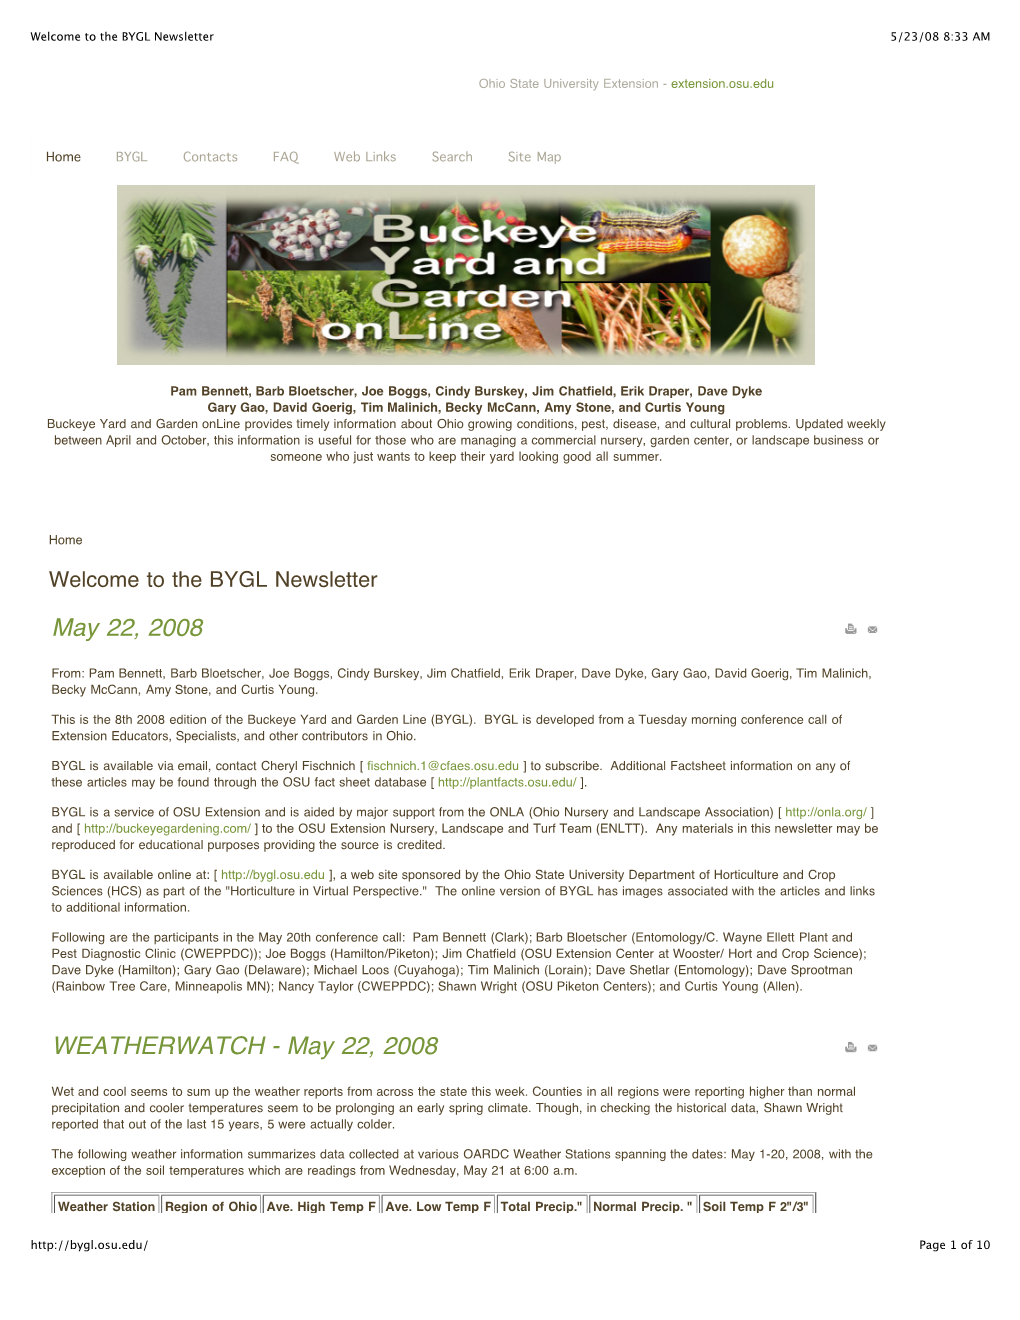 BYGL Newsletter May 22, 2008